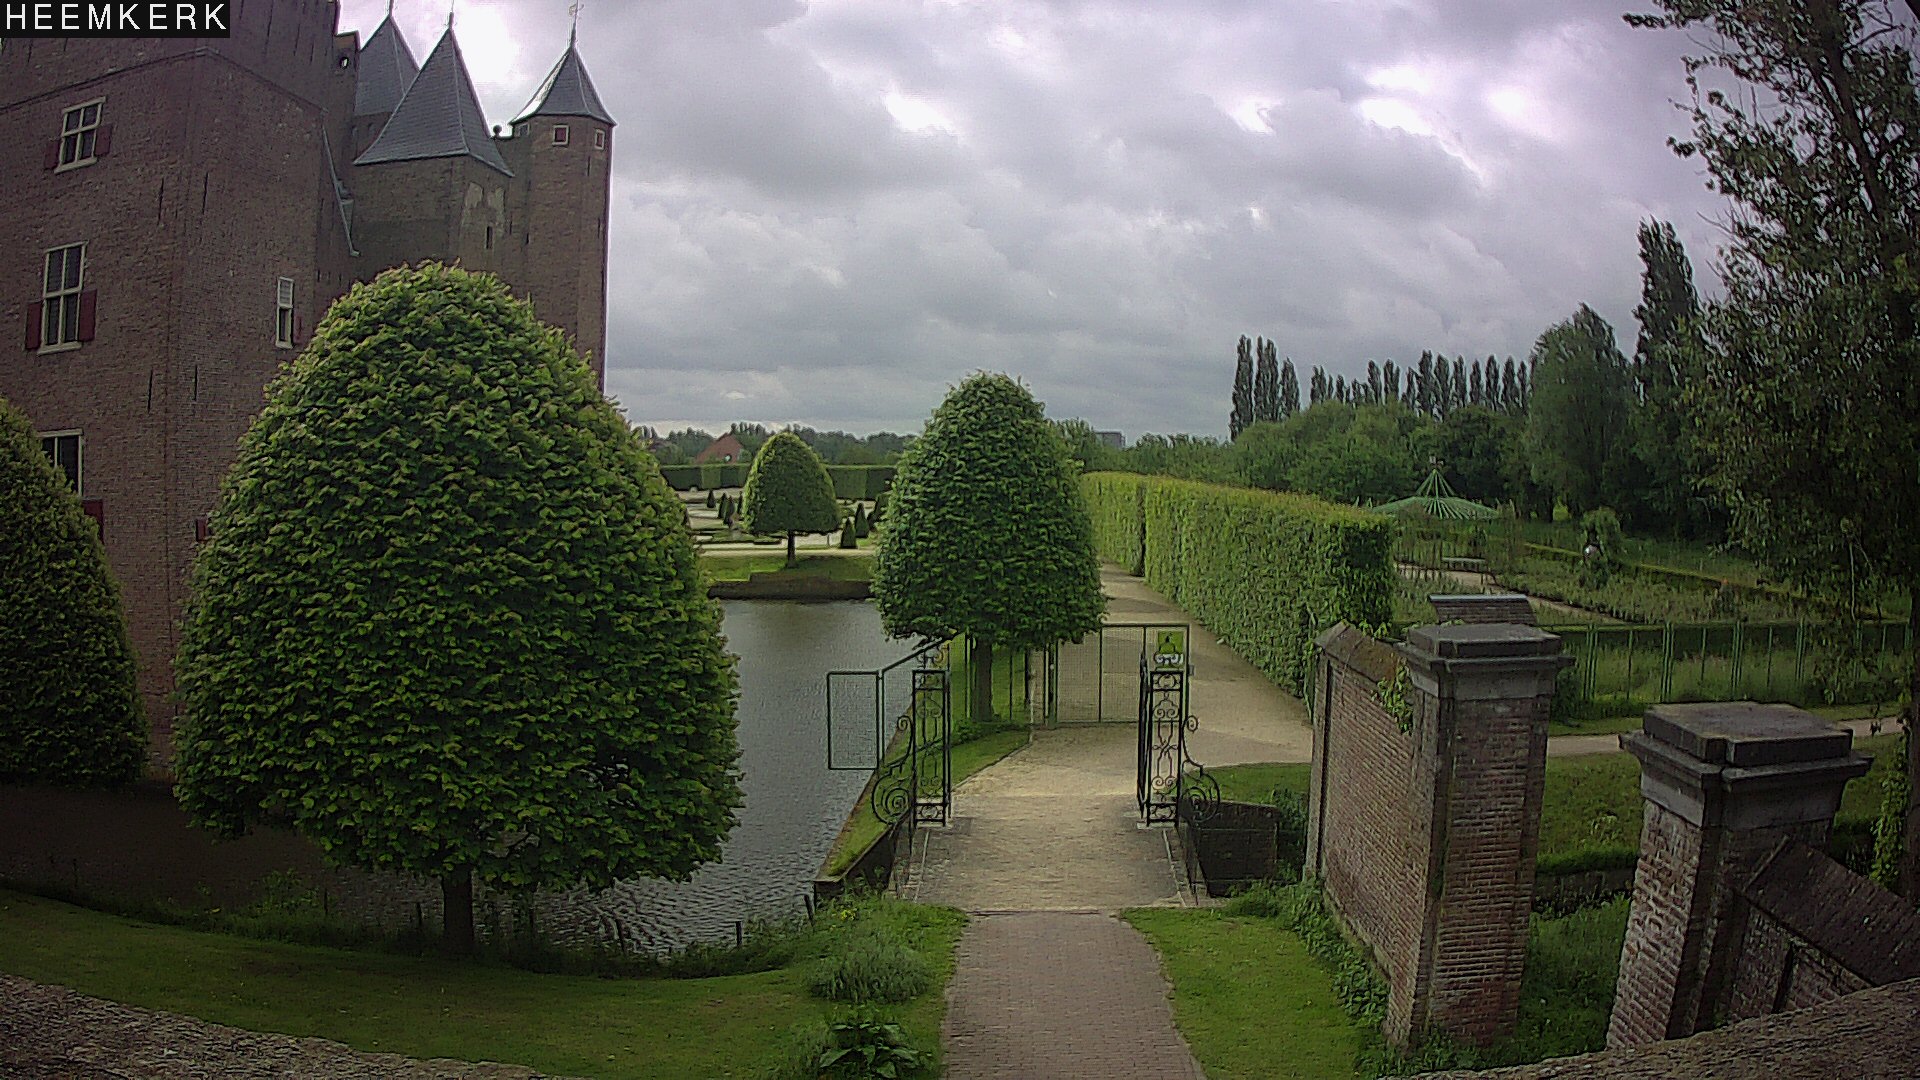 Heemskerk Tor. 09:46